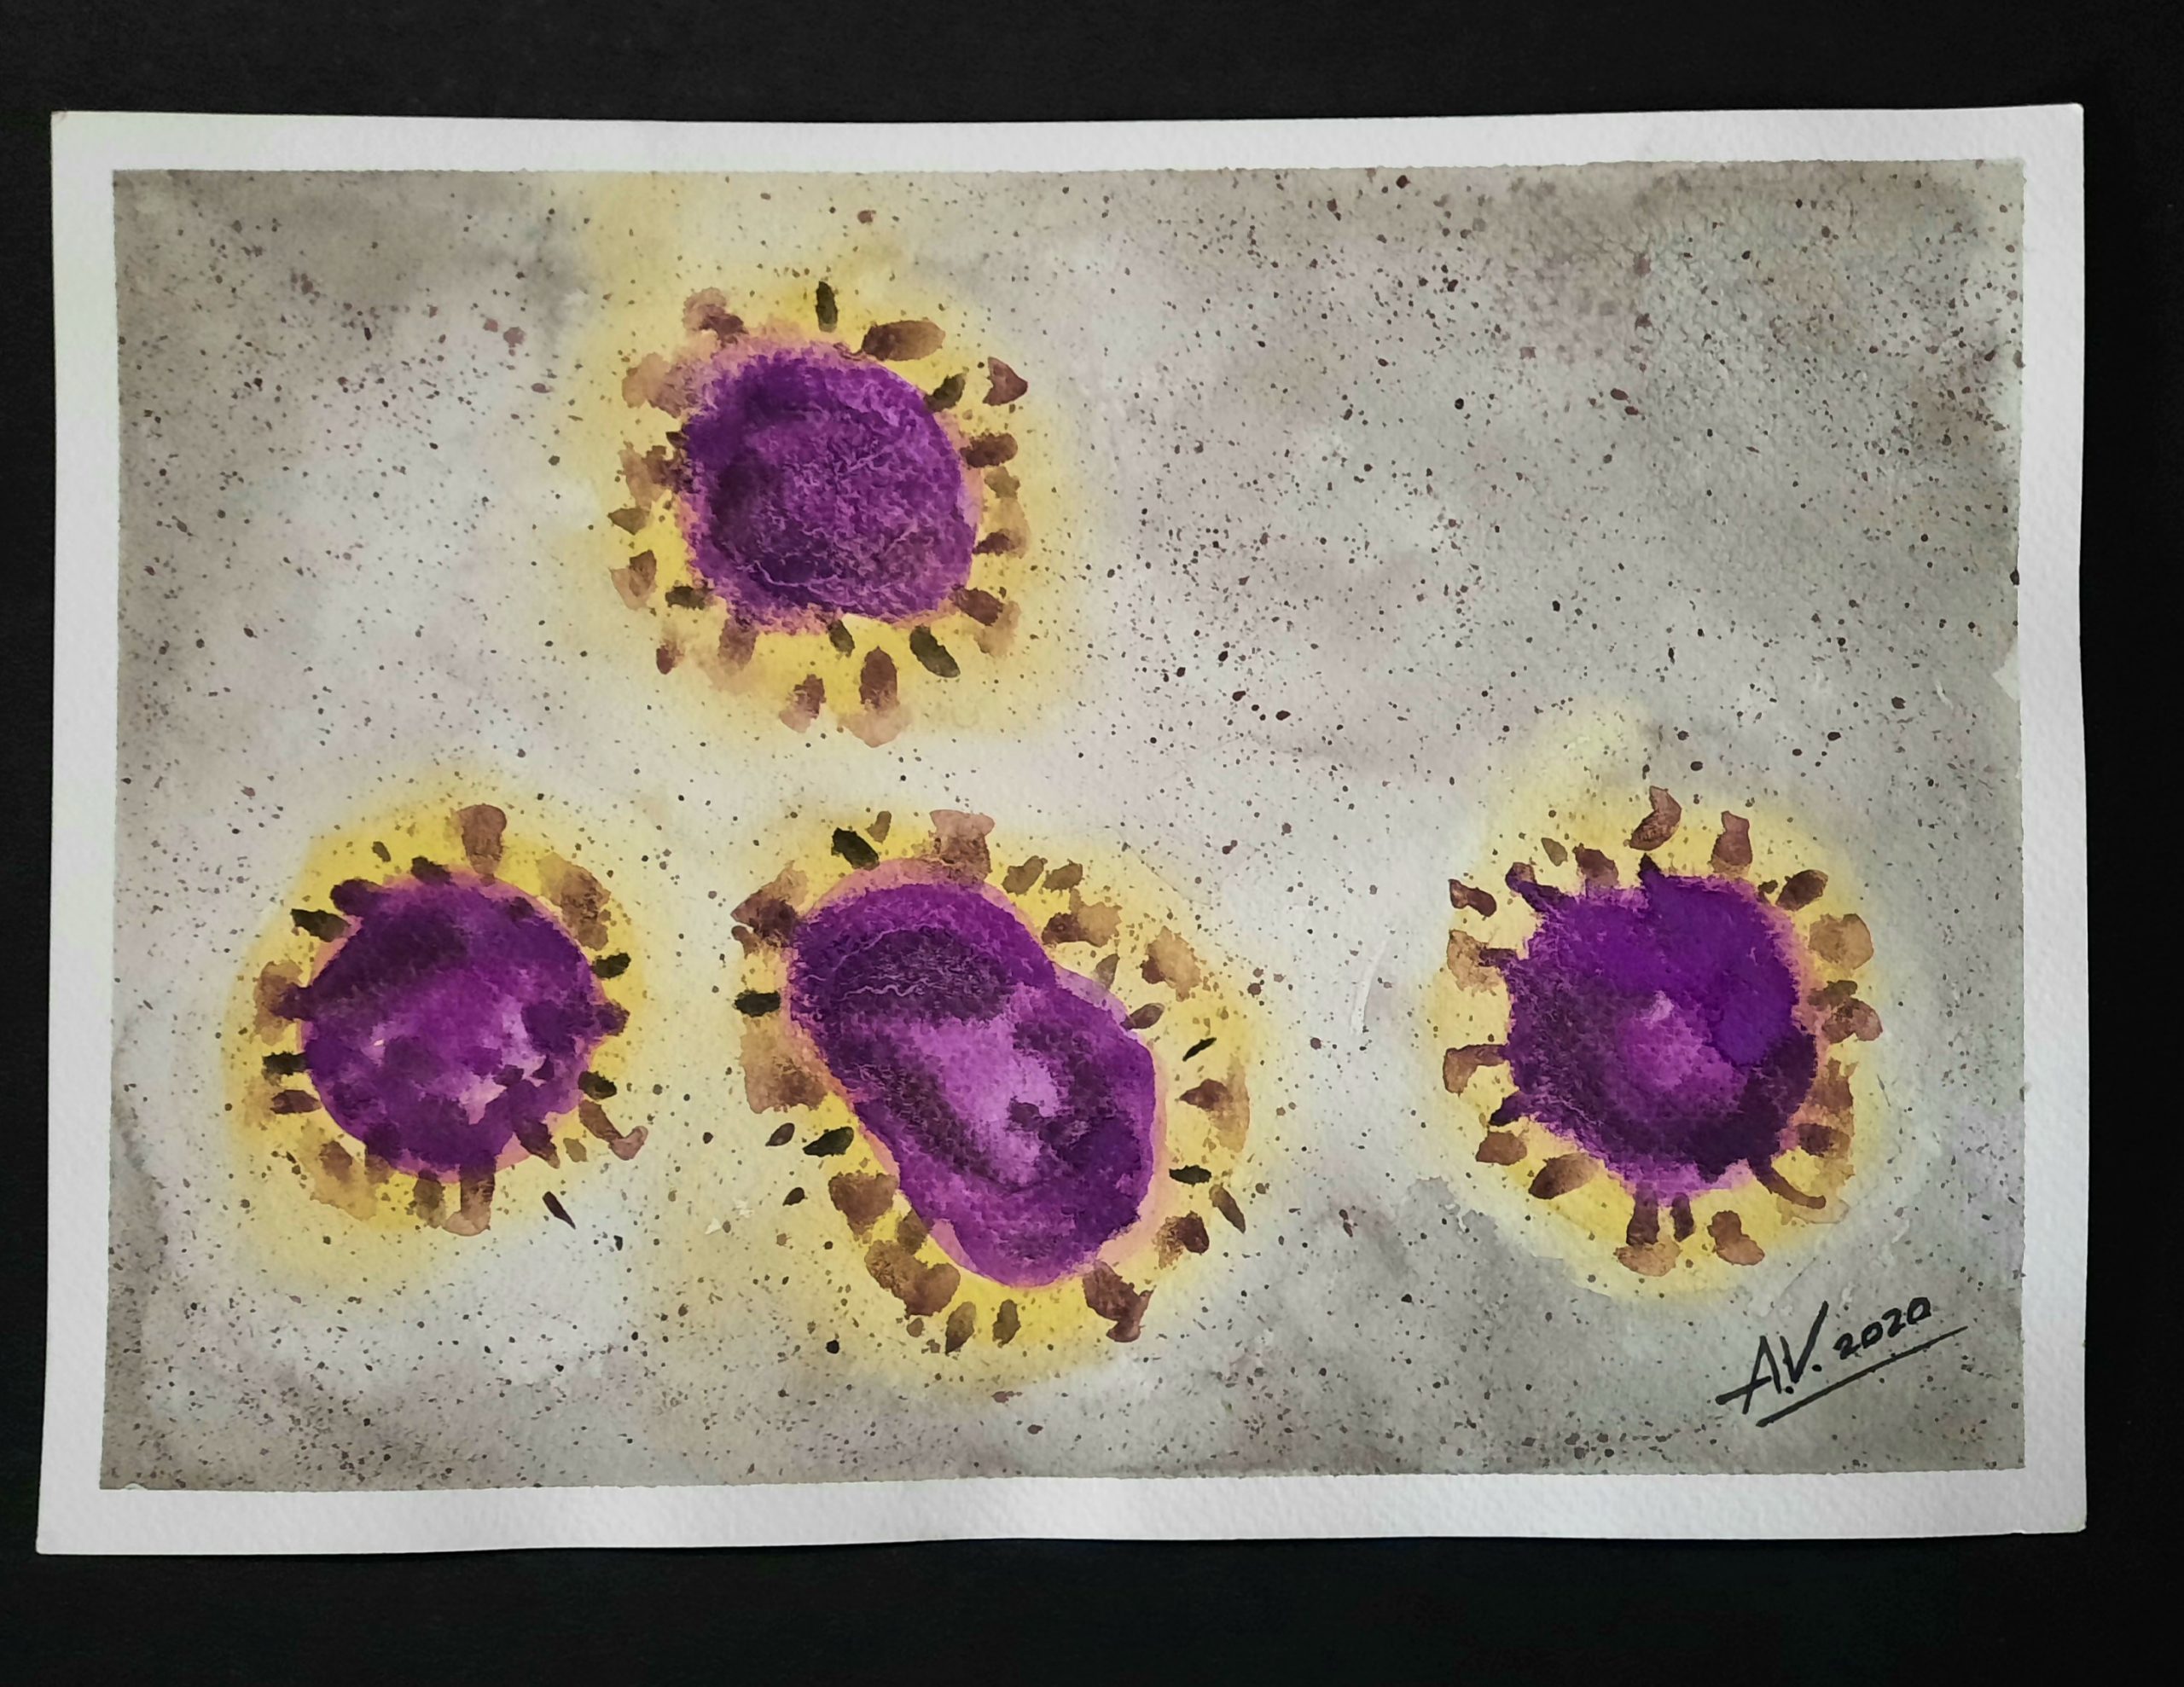 A painting of Corona virus